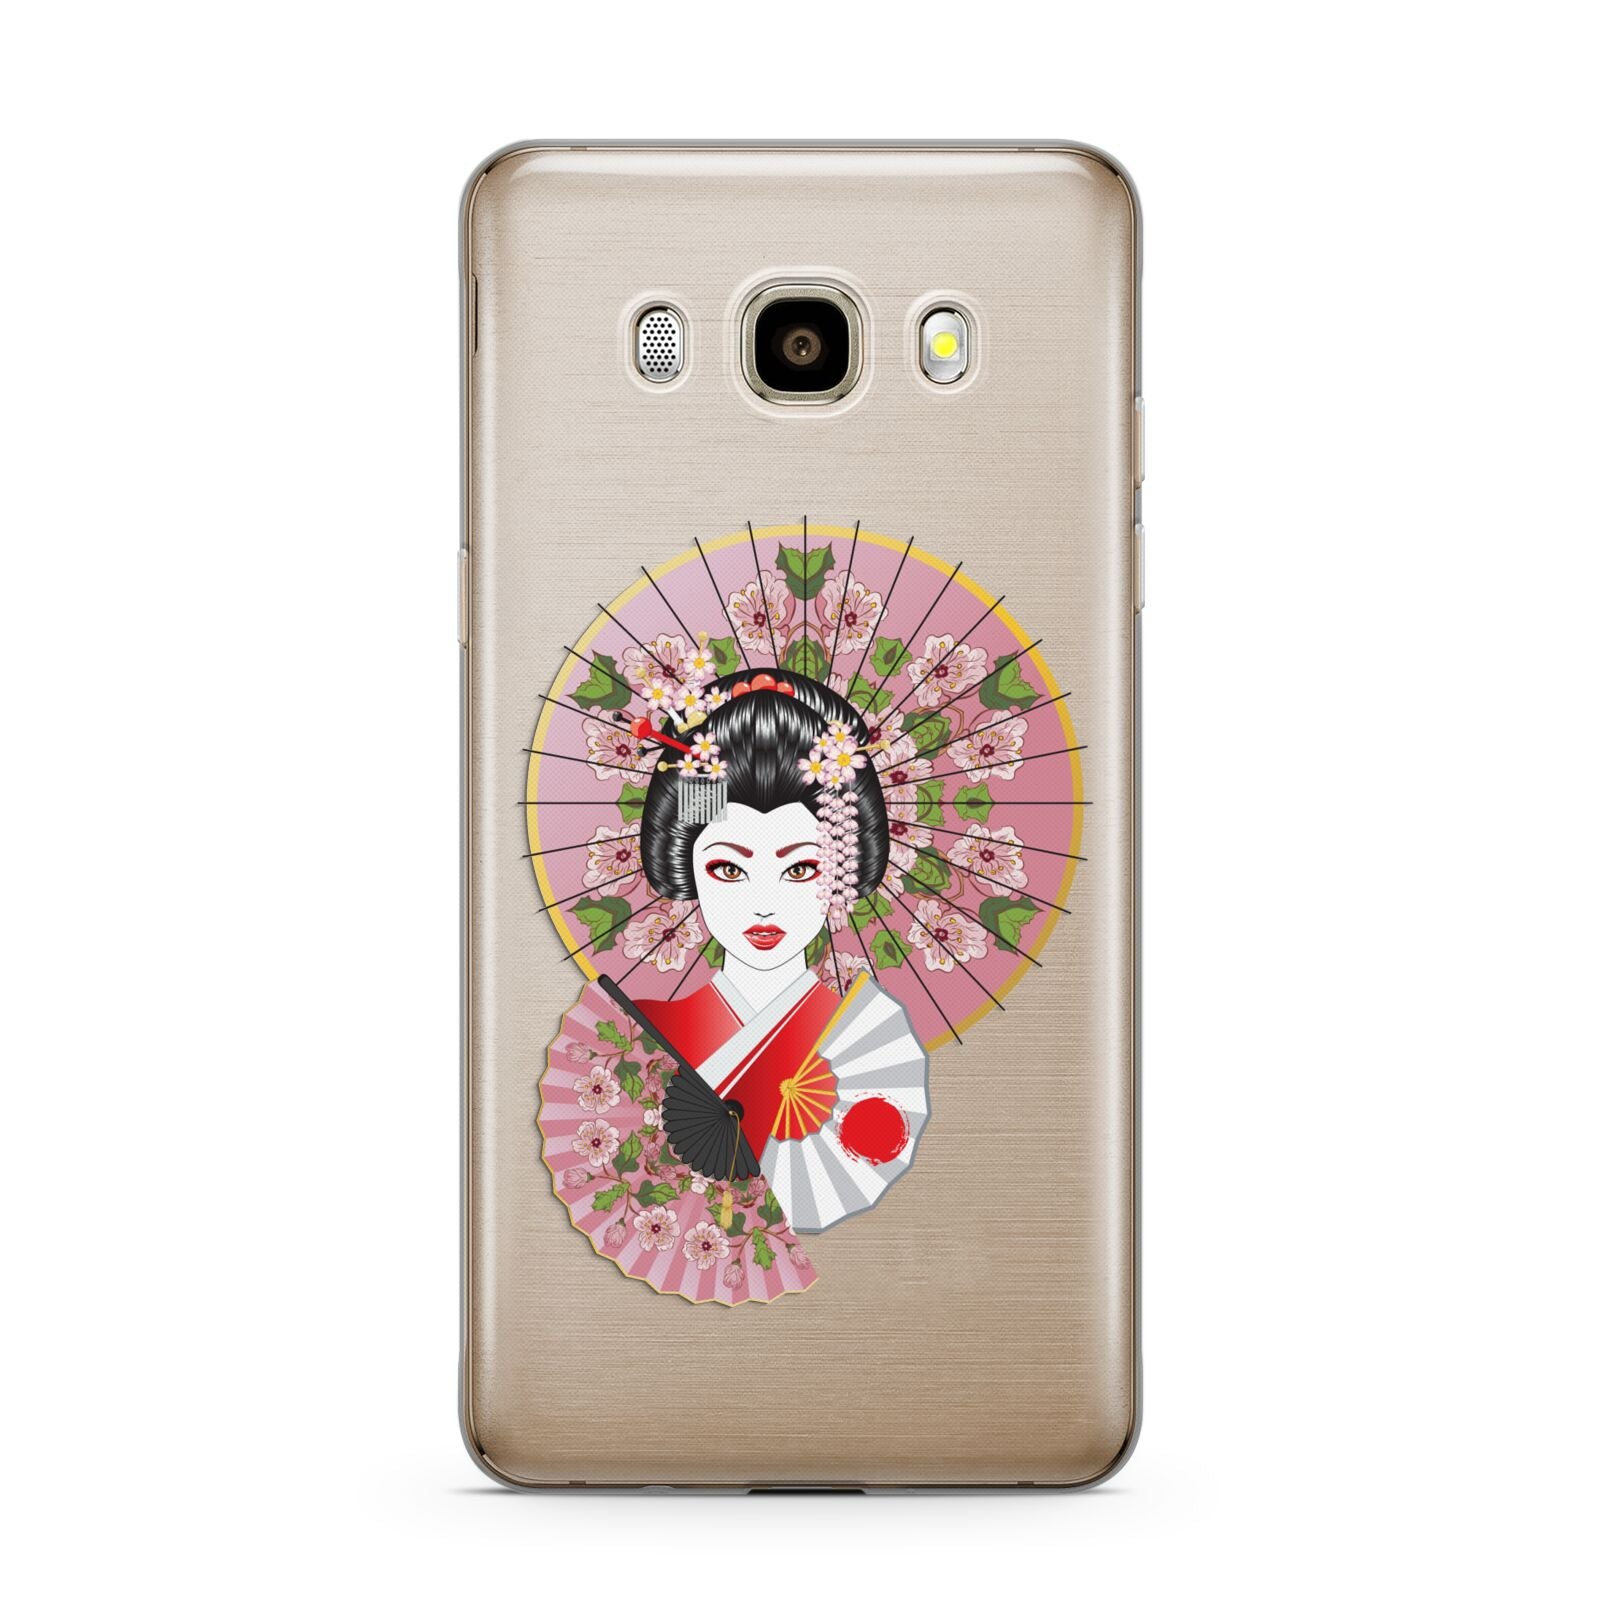 Geisha Girl Samsung Galaxy J7 2016 Case on gold phone